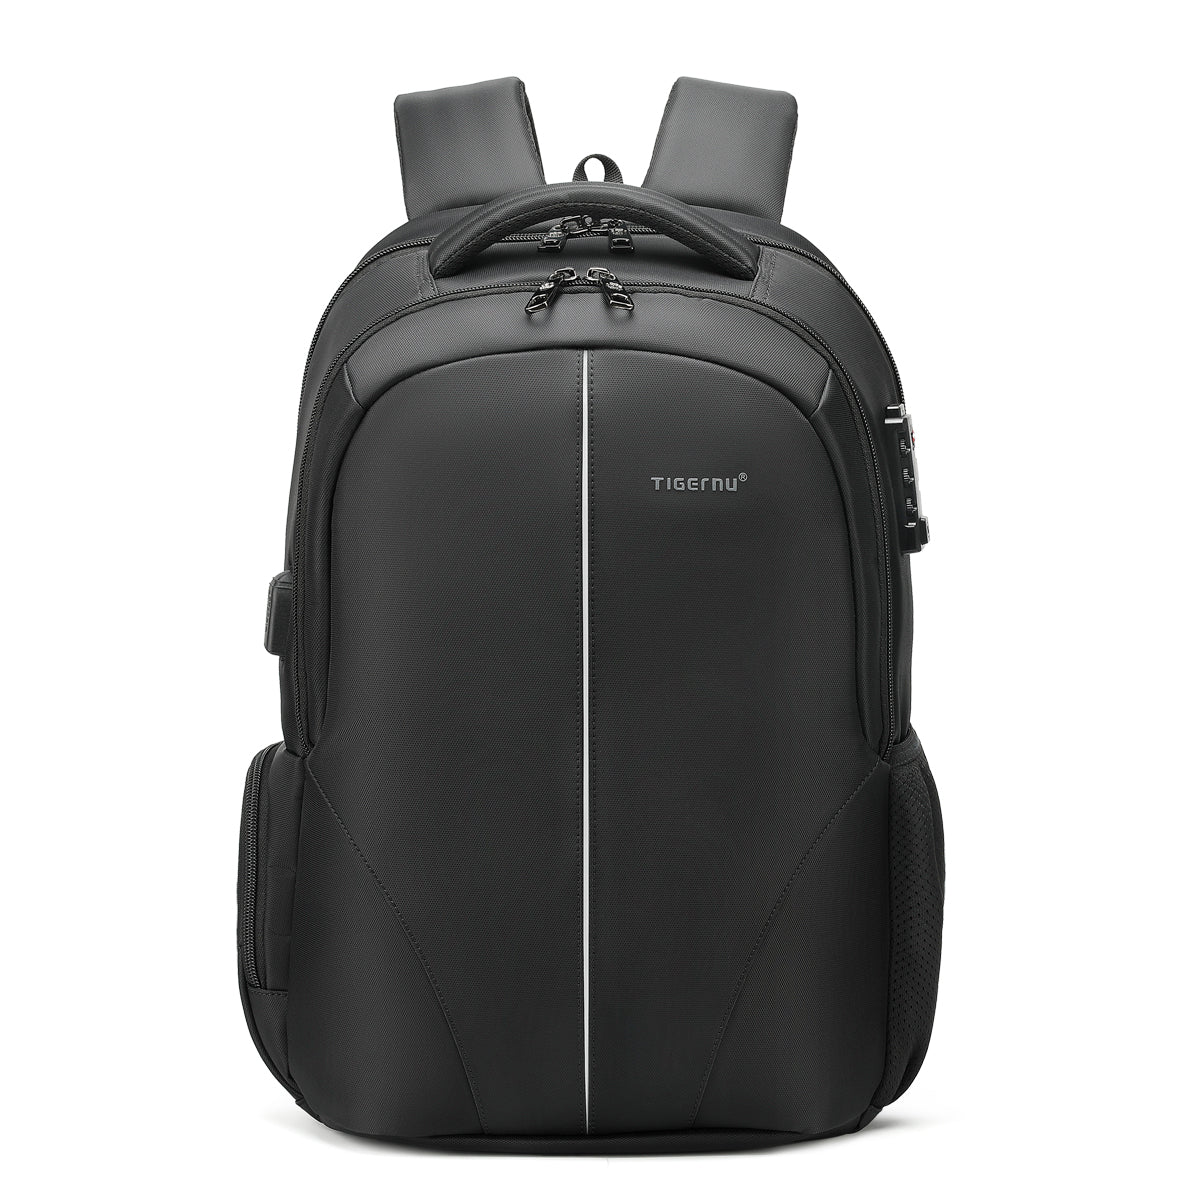 Lifetime warranty TSA anti-theft men's backpack 15.6-17 inch laptop backpack waterproof travel backpack men's USB charger Mochila